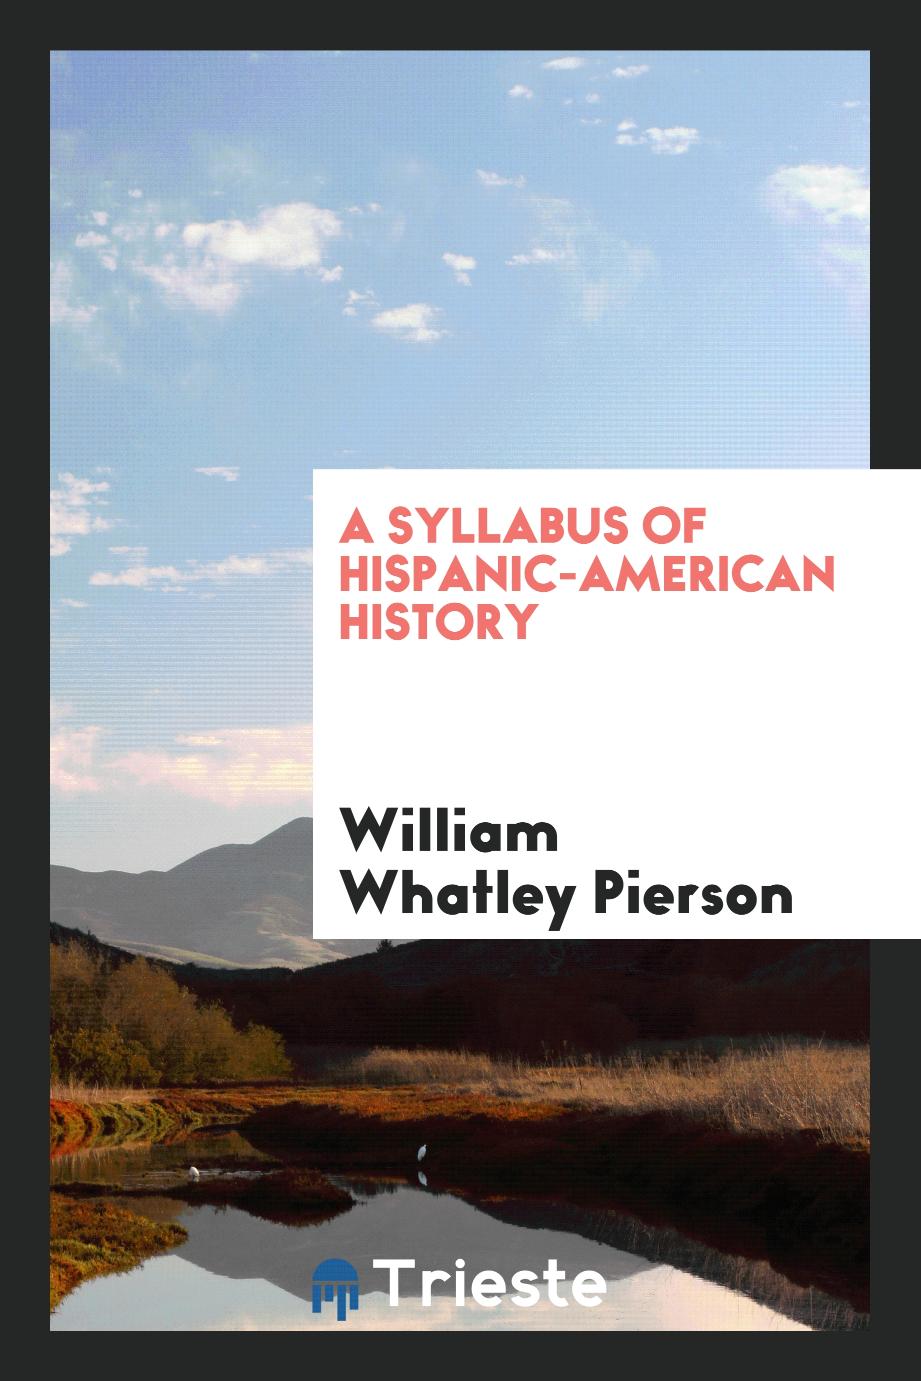 A syllabus of Hispanic-American history